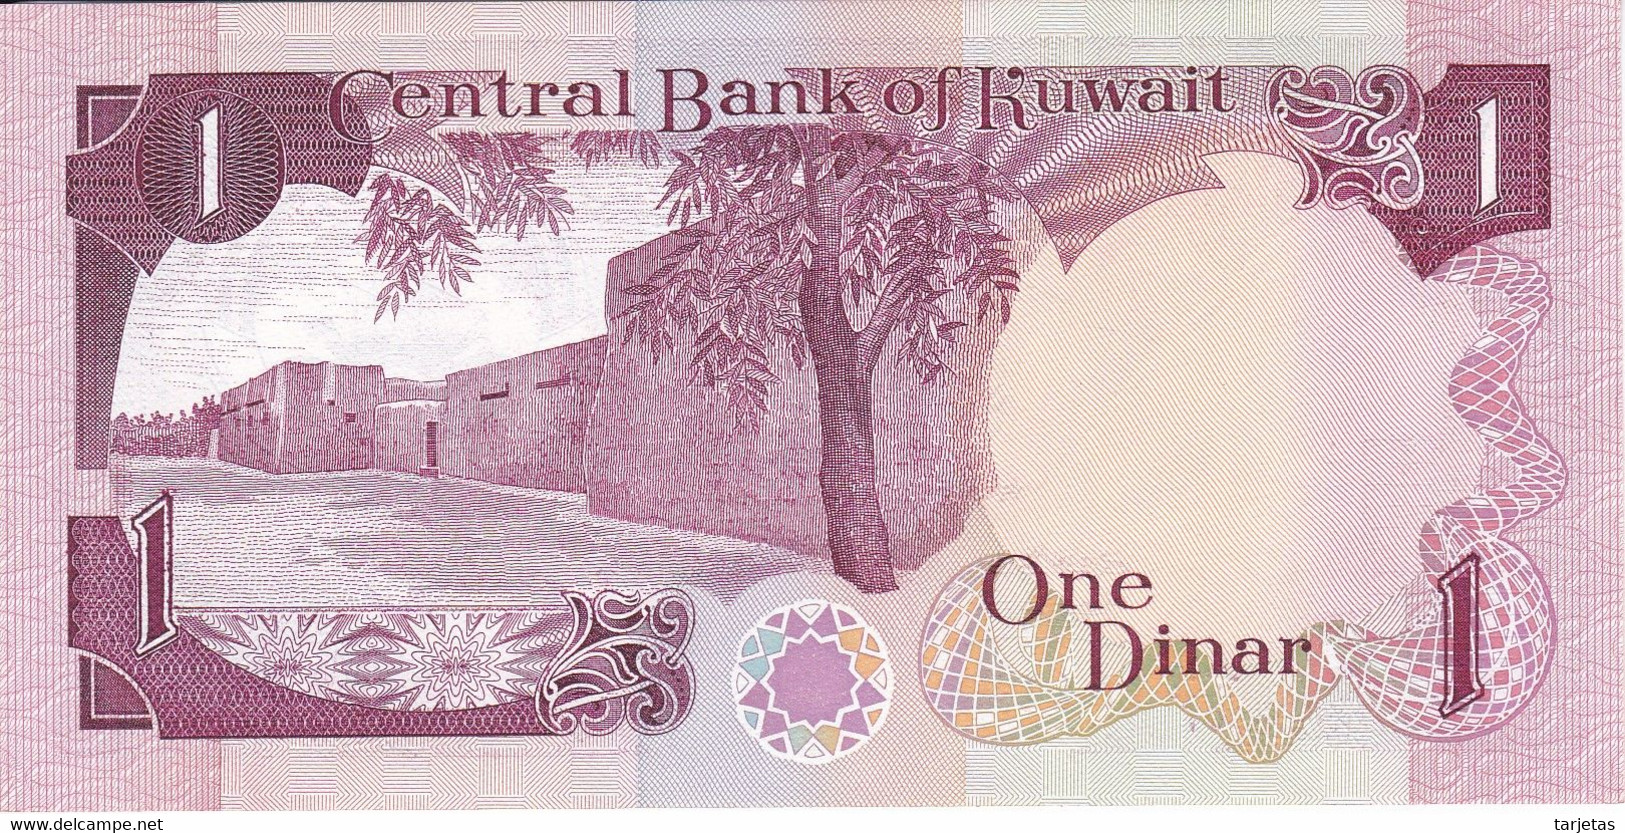 BILLETE DE KUWAIT DE 1 DINAR DEL AÑO 1968 SIN CIRCULAR (UNC)  (BANKNOTE) - Koeweit